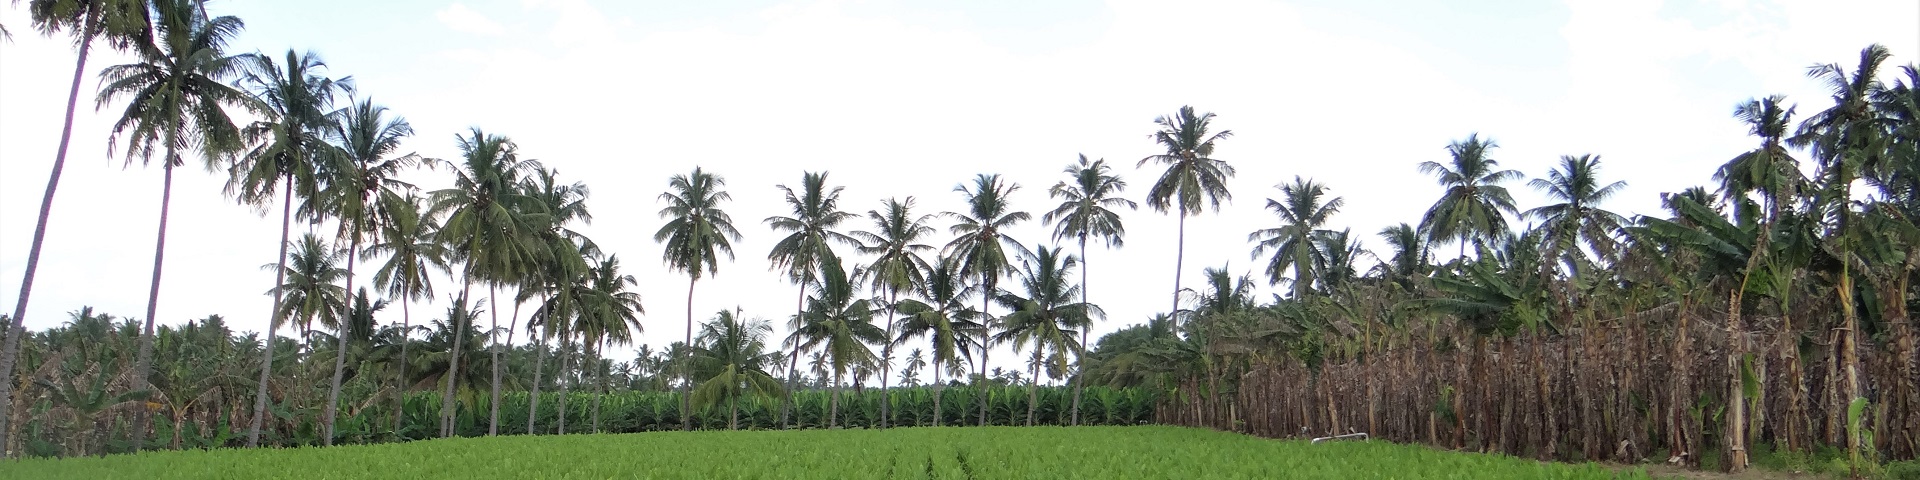 A turmeric plantation.